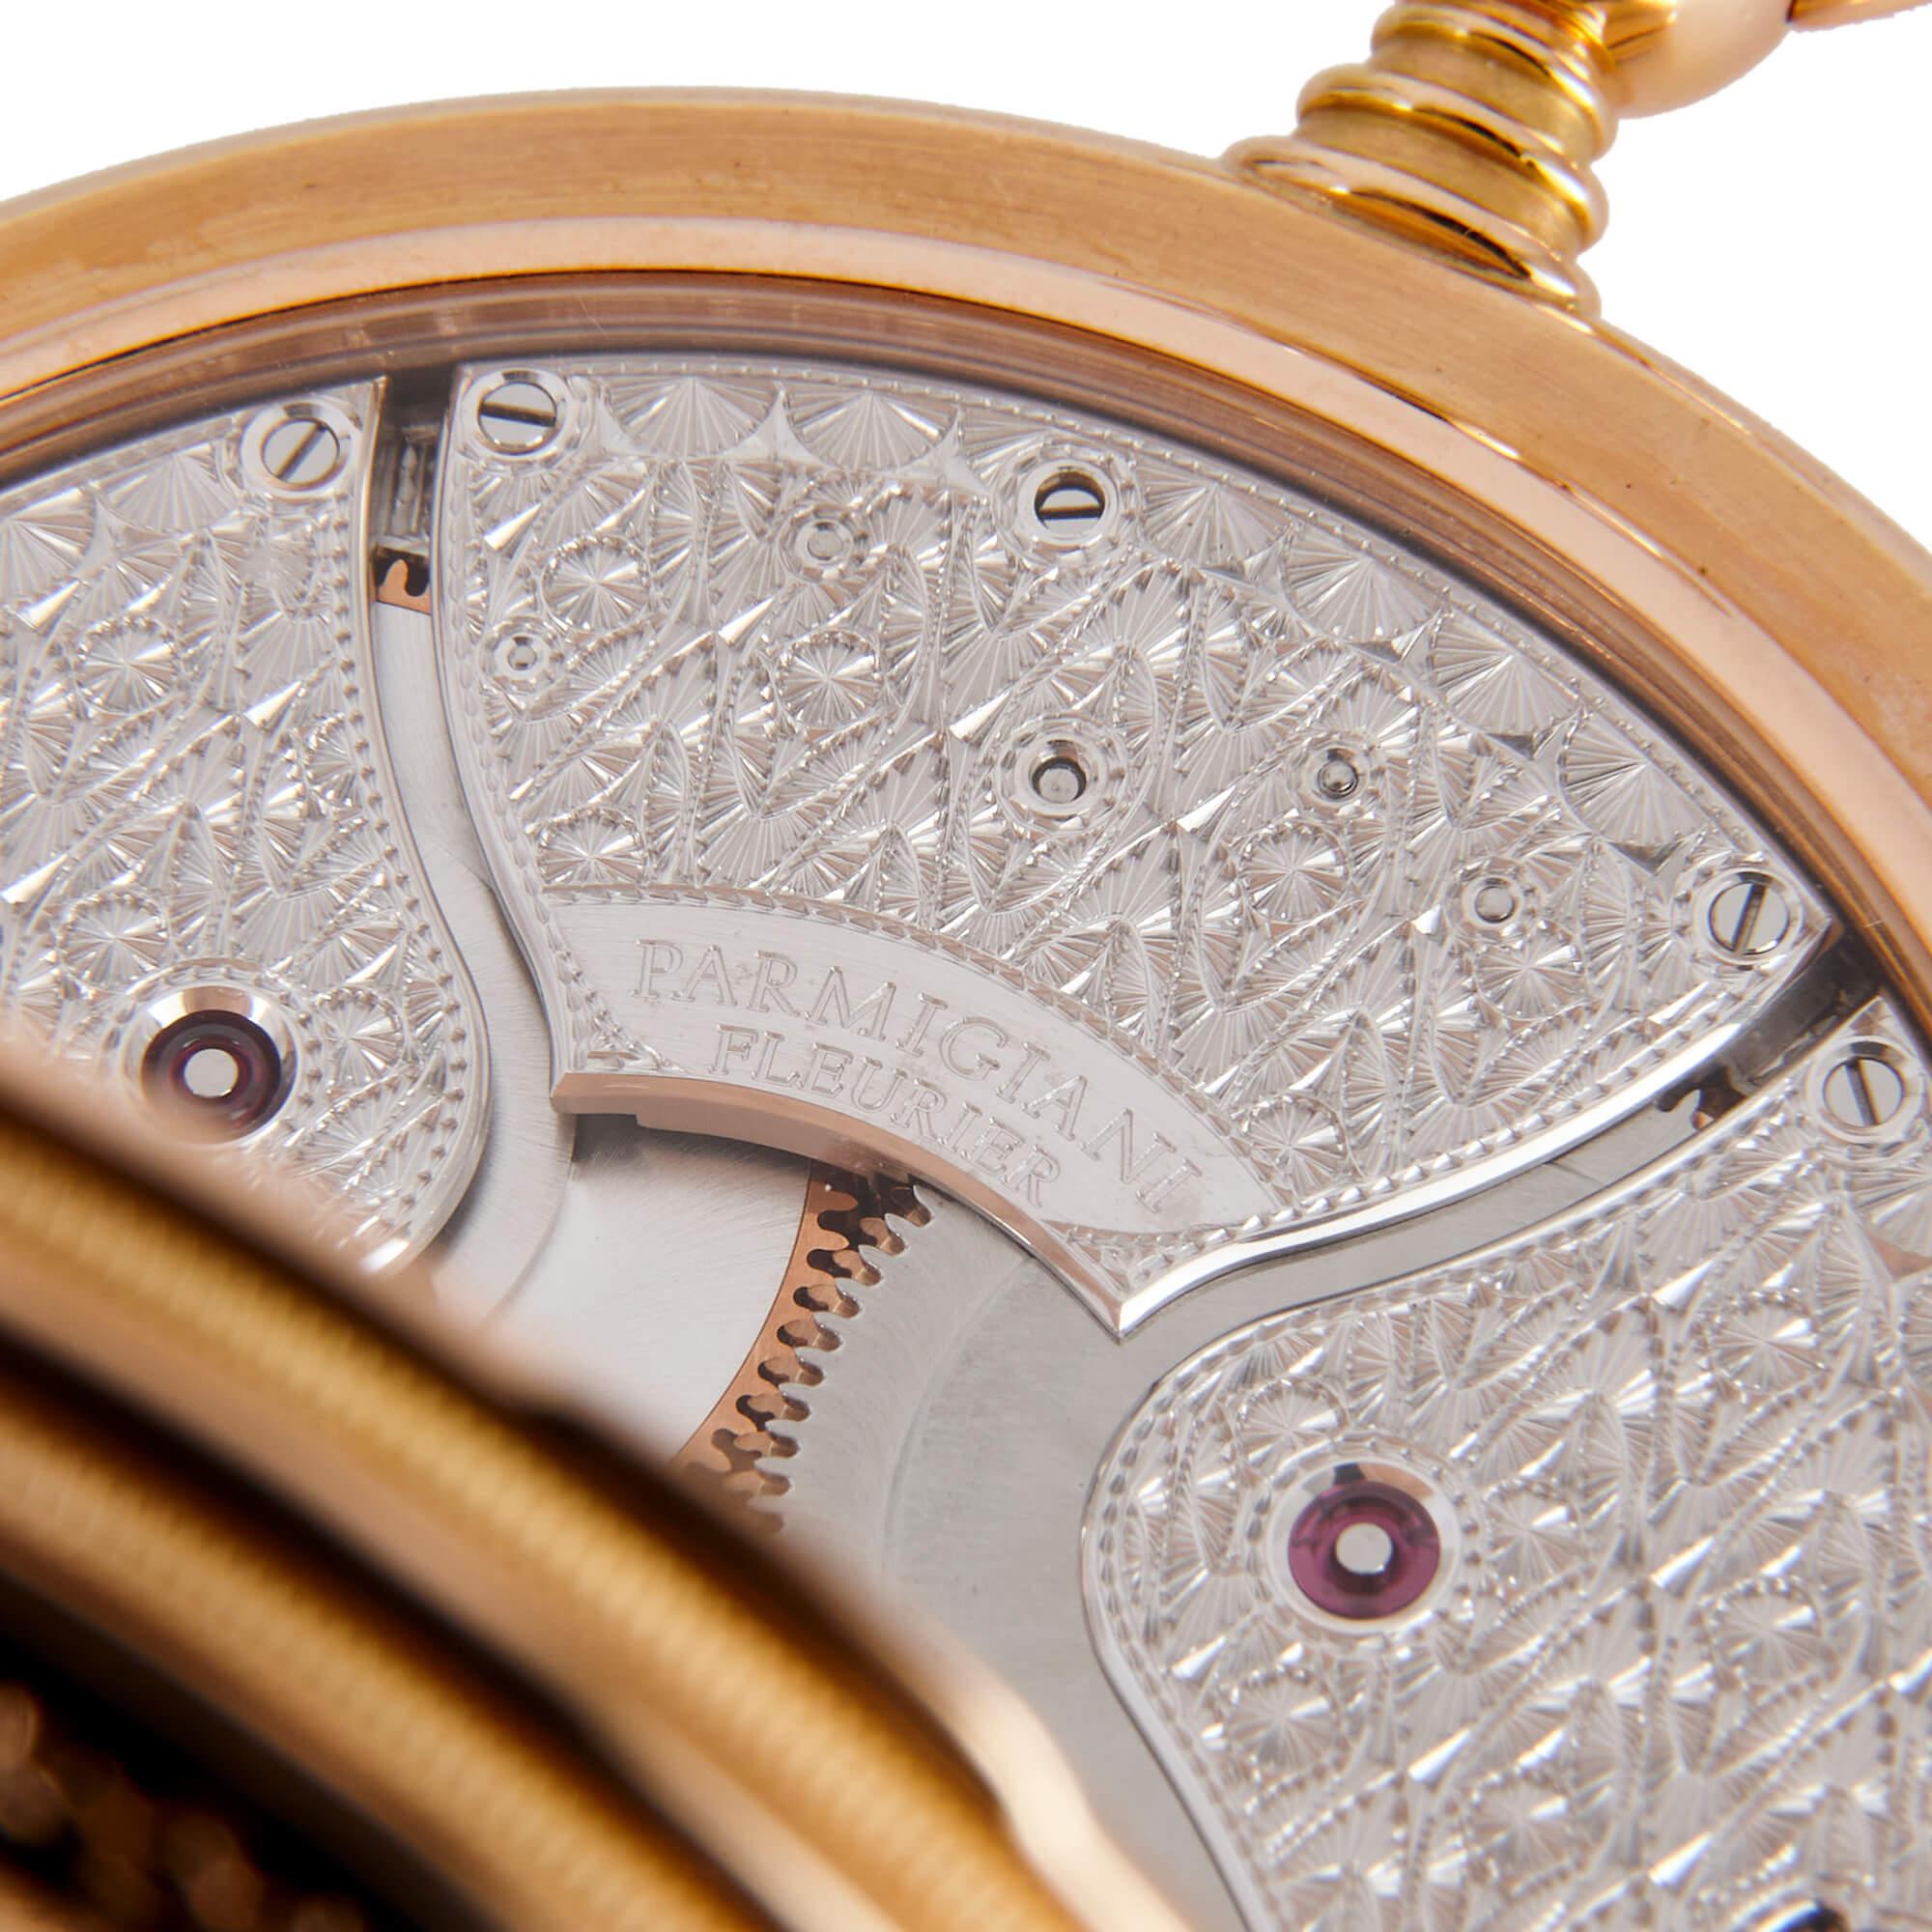 Parmigiani Fleurier, 'Nubia', Extremely Fine, Unique 18k Pink Gold Pocket Watch For Sale 2